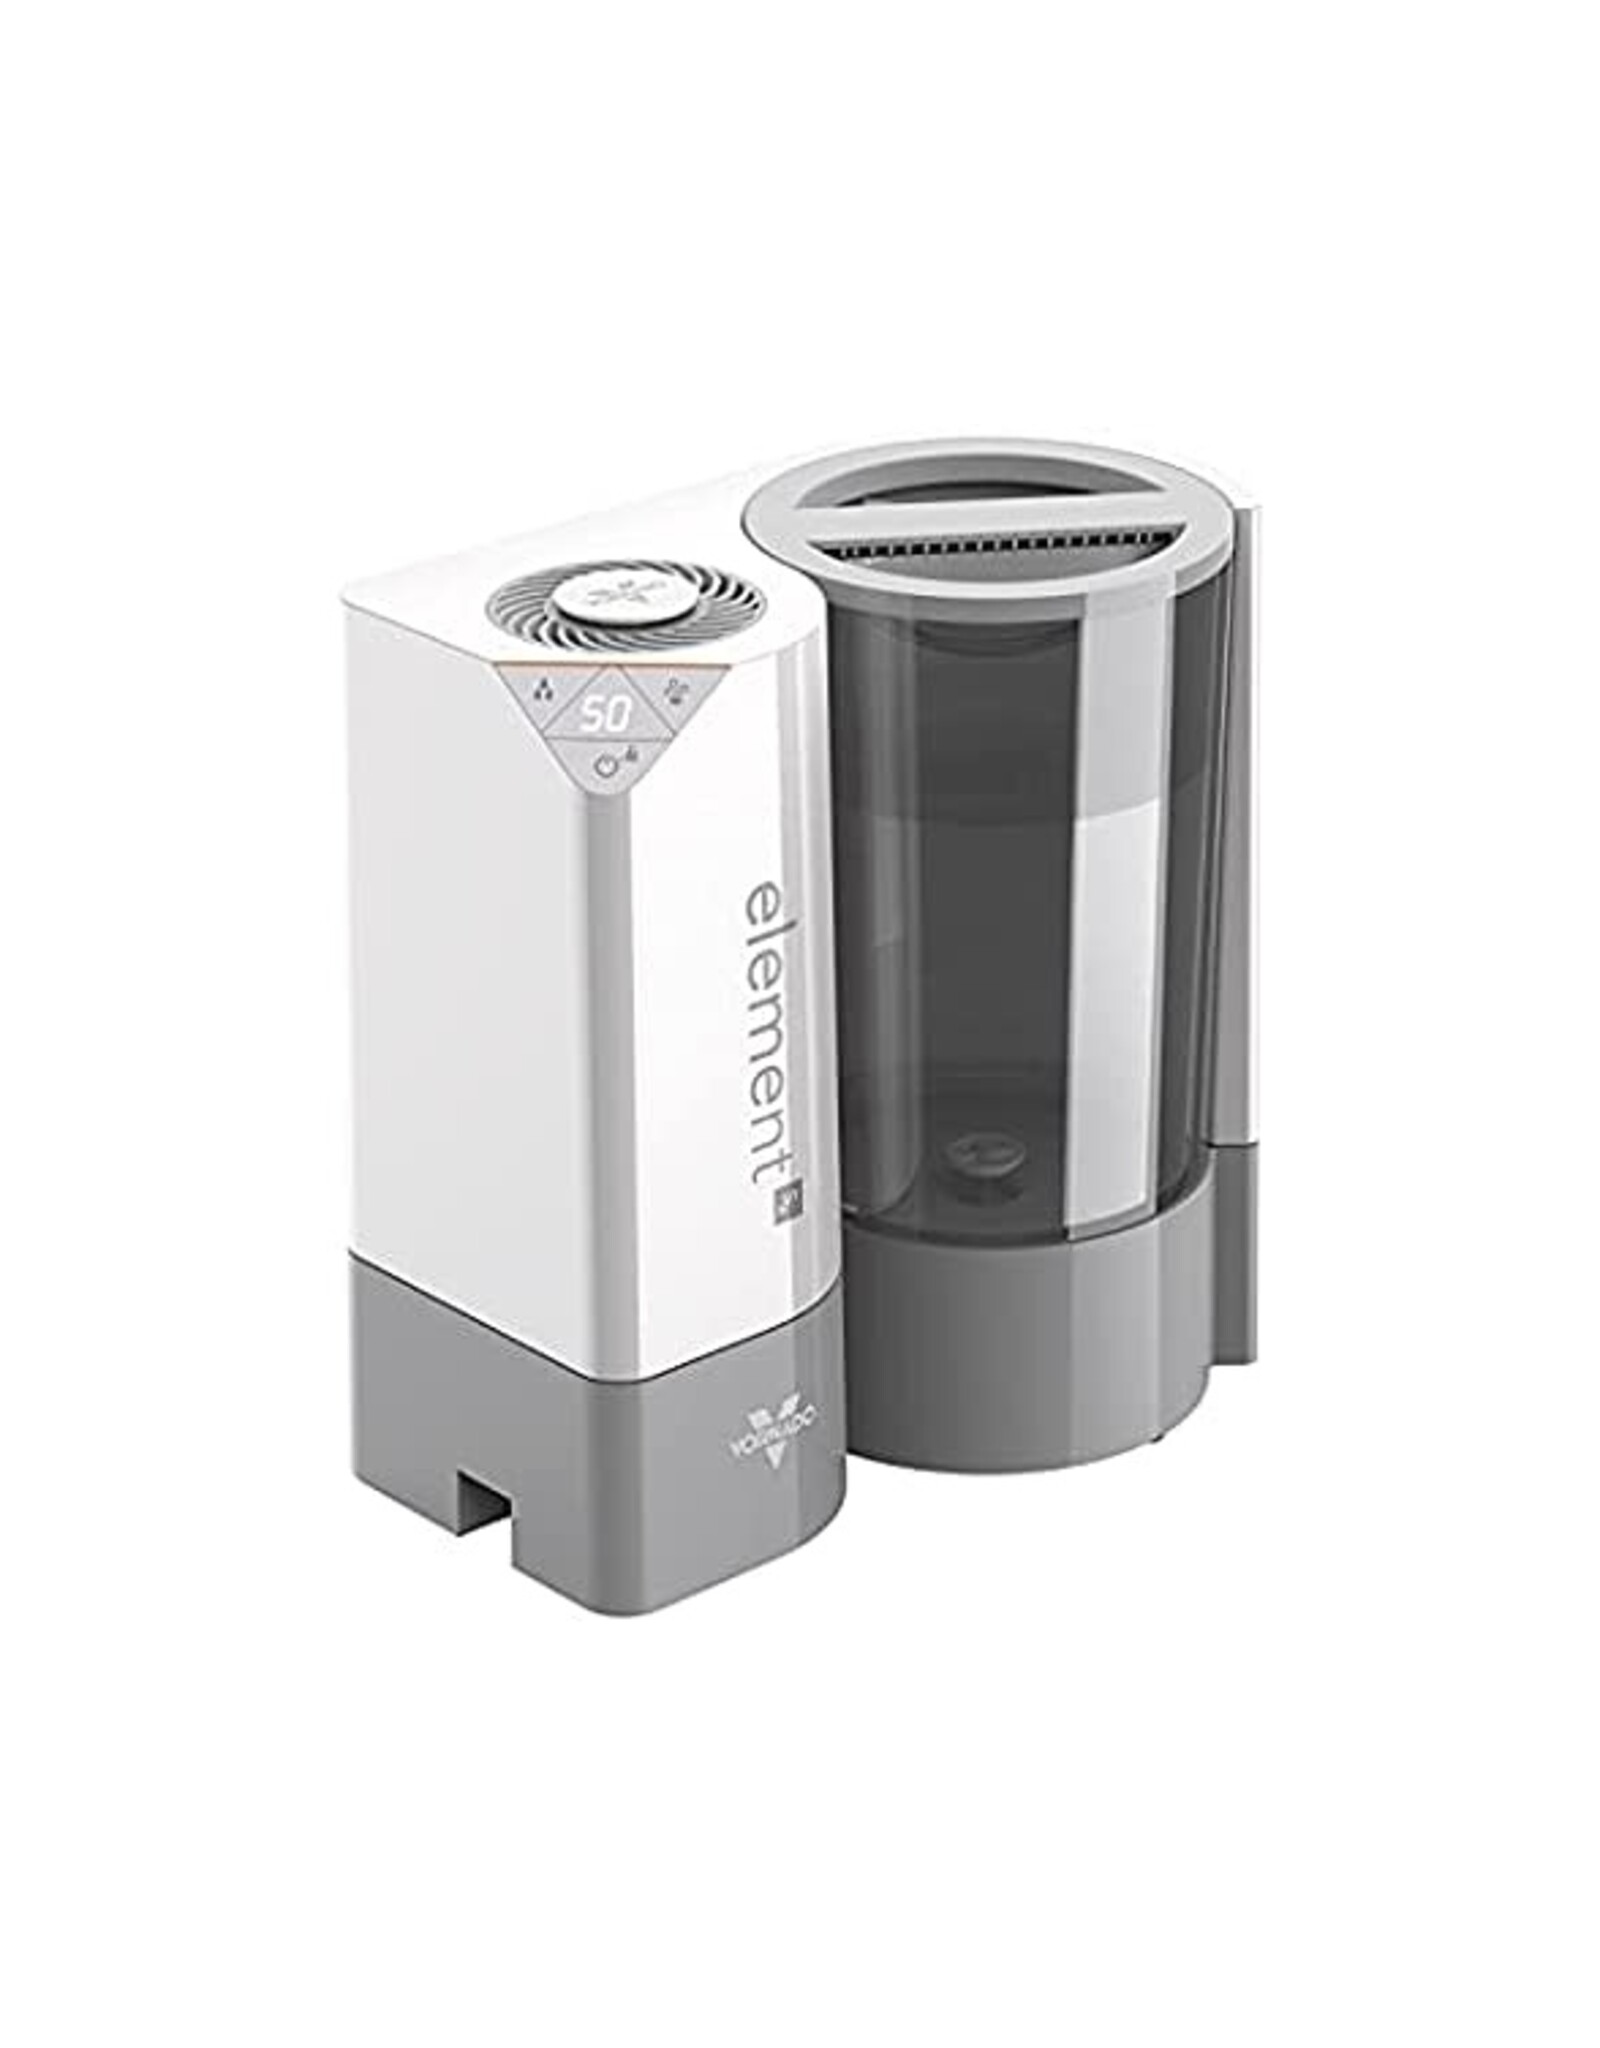 vornado Vornado Element SA Air + Steam Humidifier with Auto Refill Notification, 0.75 Gallon Capacity, No Filters Required